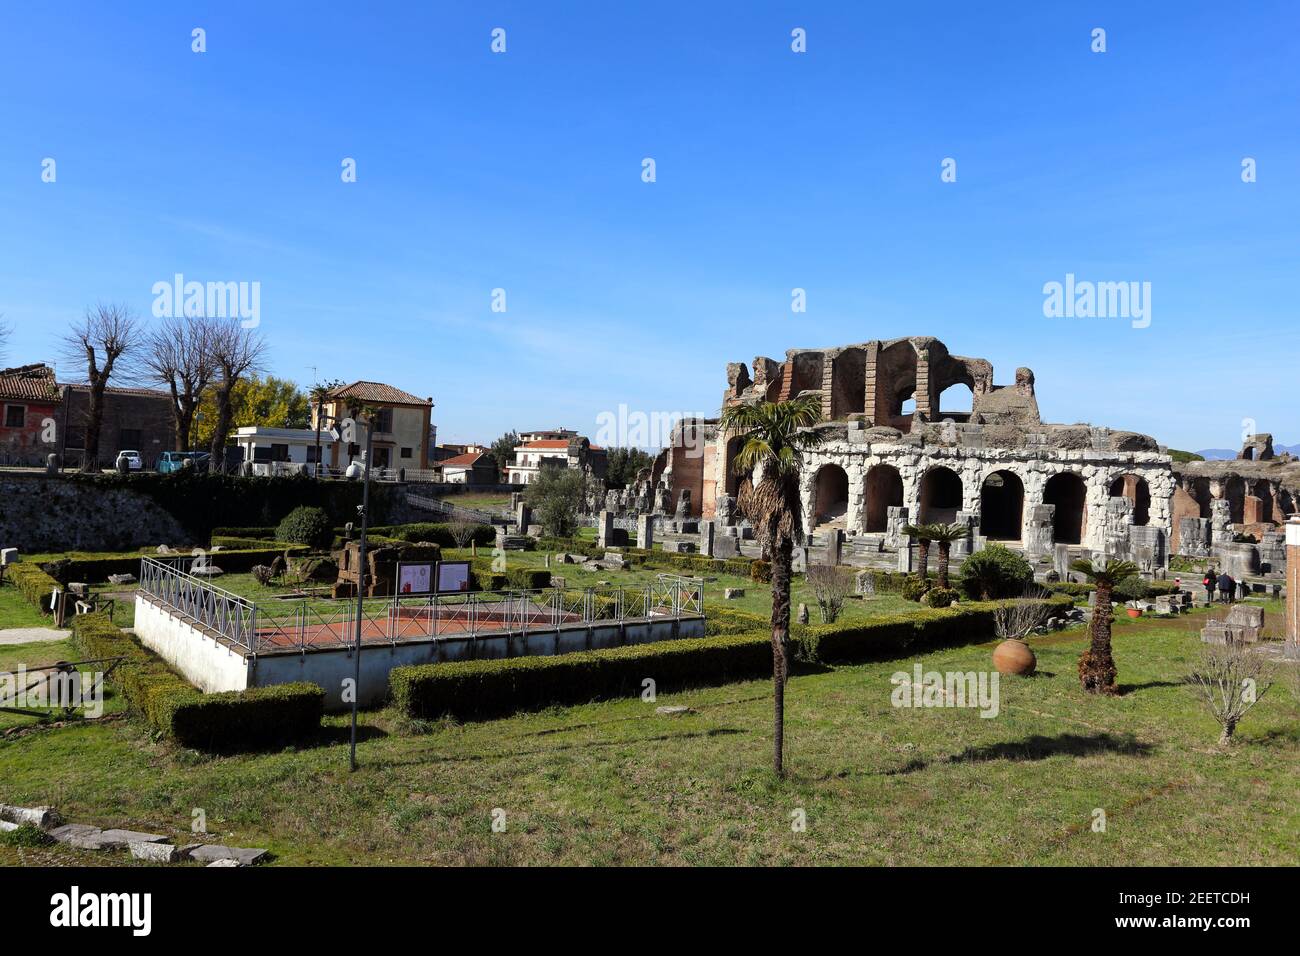 Santa Maria Capua Vetere, Italy - February 16, 2021: The Anfiteatro Campano or Anfiteatro Capuano Stock Photo